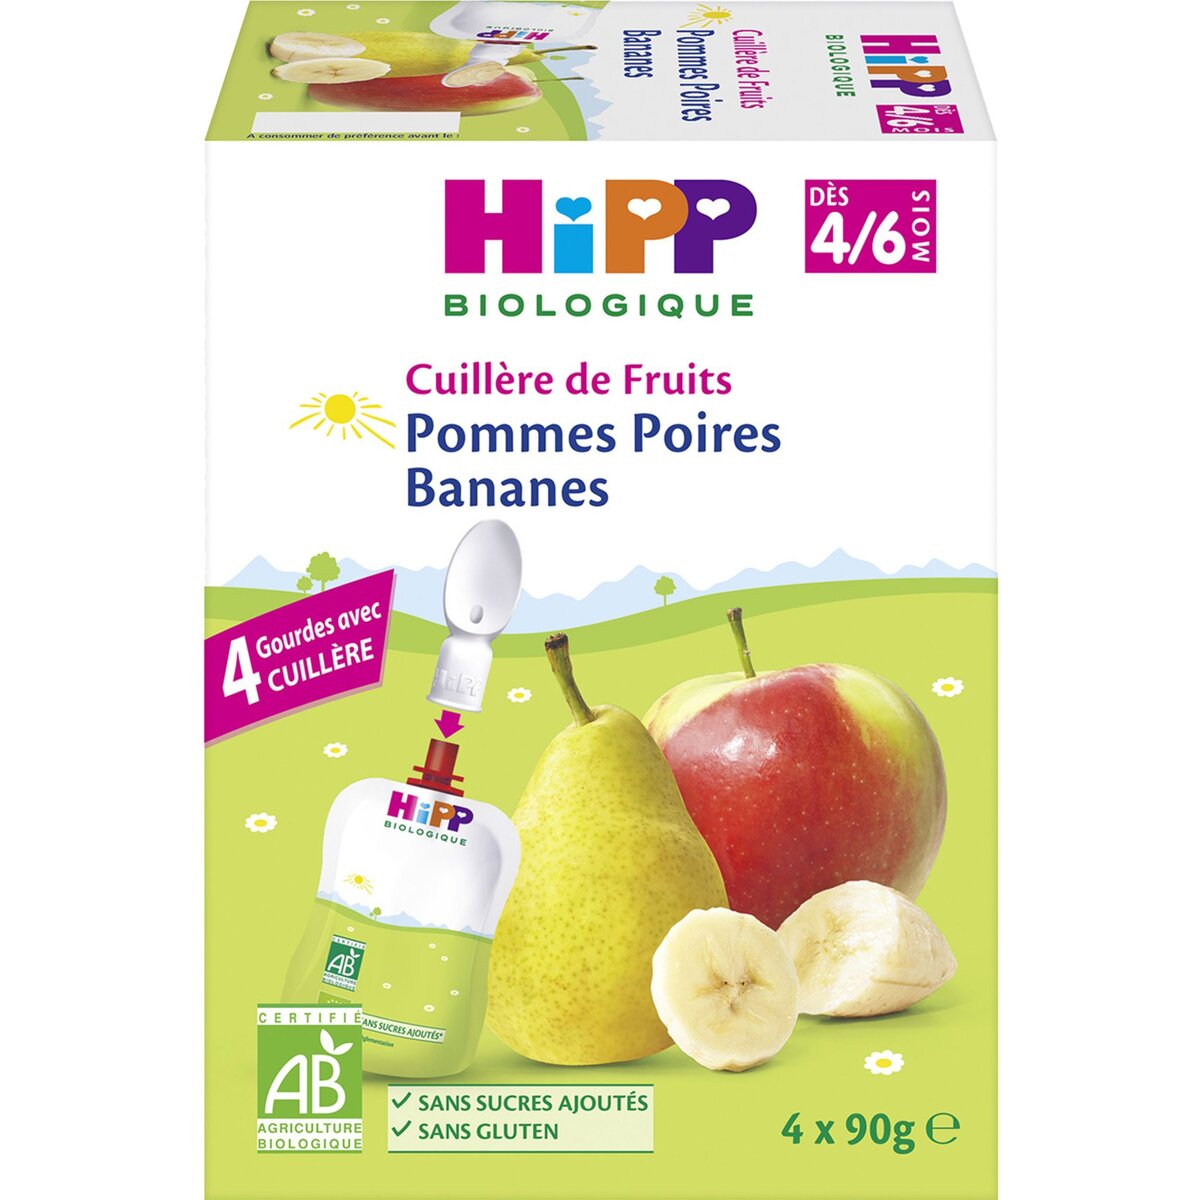 HIPP Hipp Gourde dessert pomme poire banane bio dès 4 mois 4x90g 4x90g